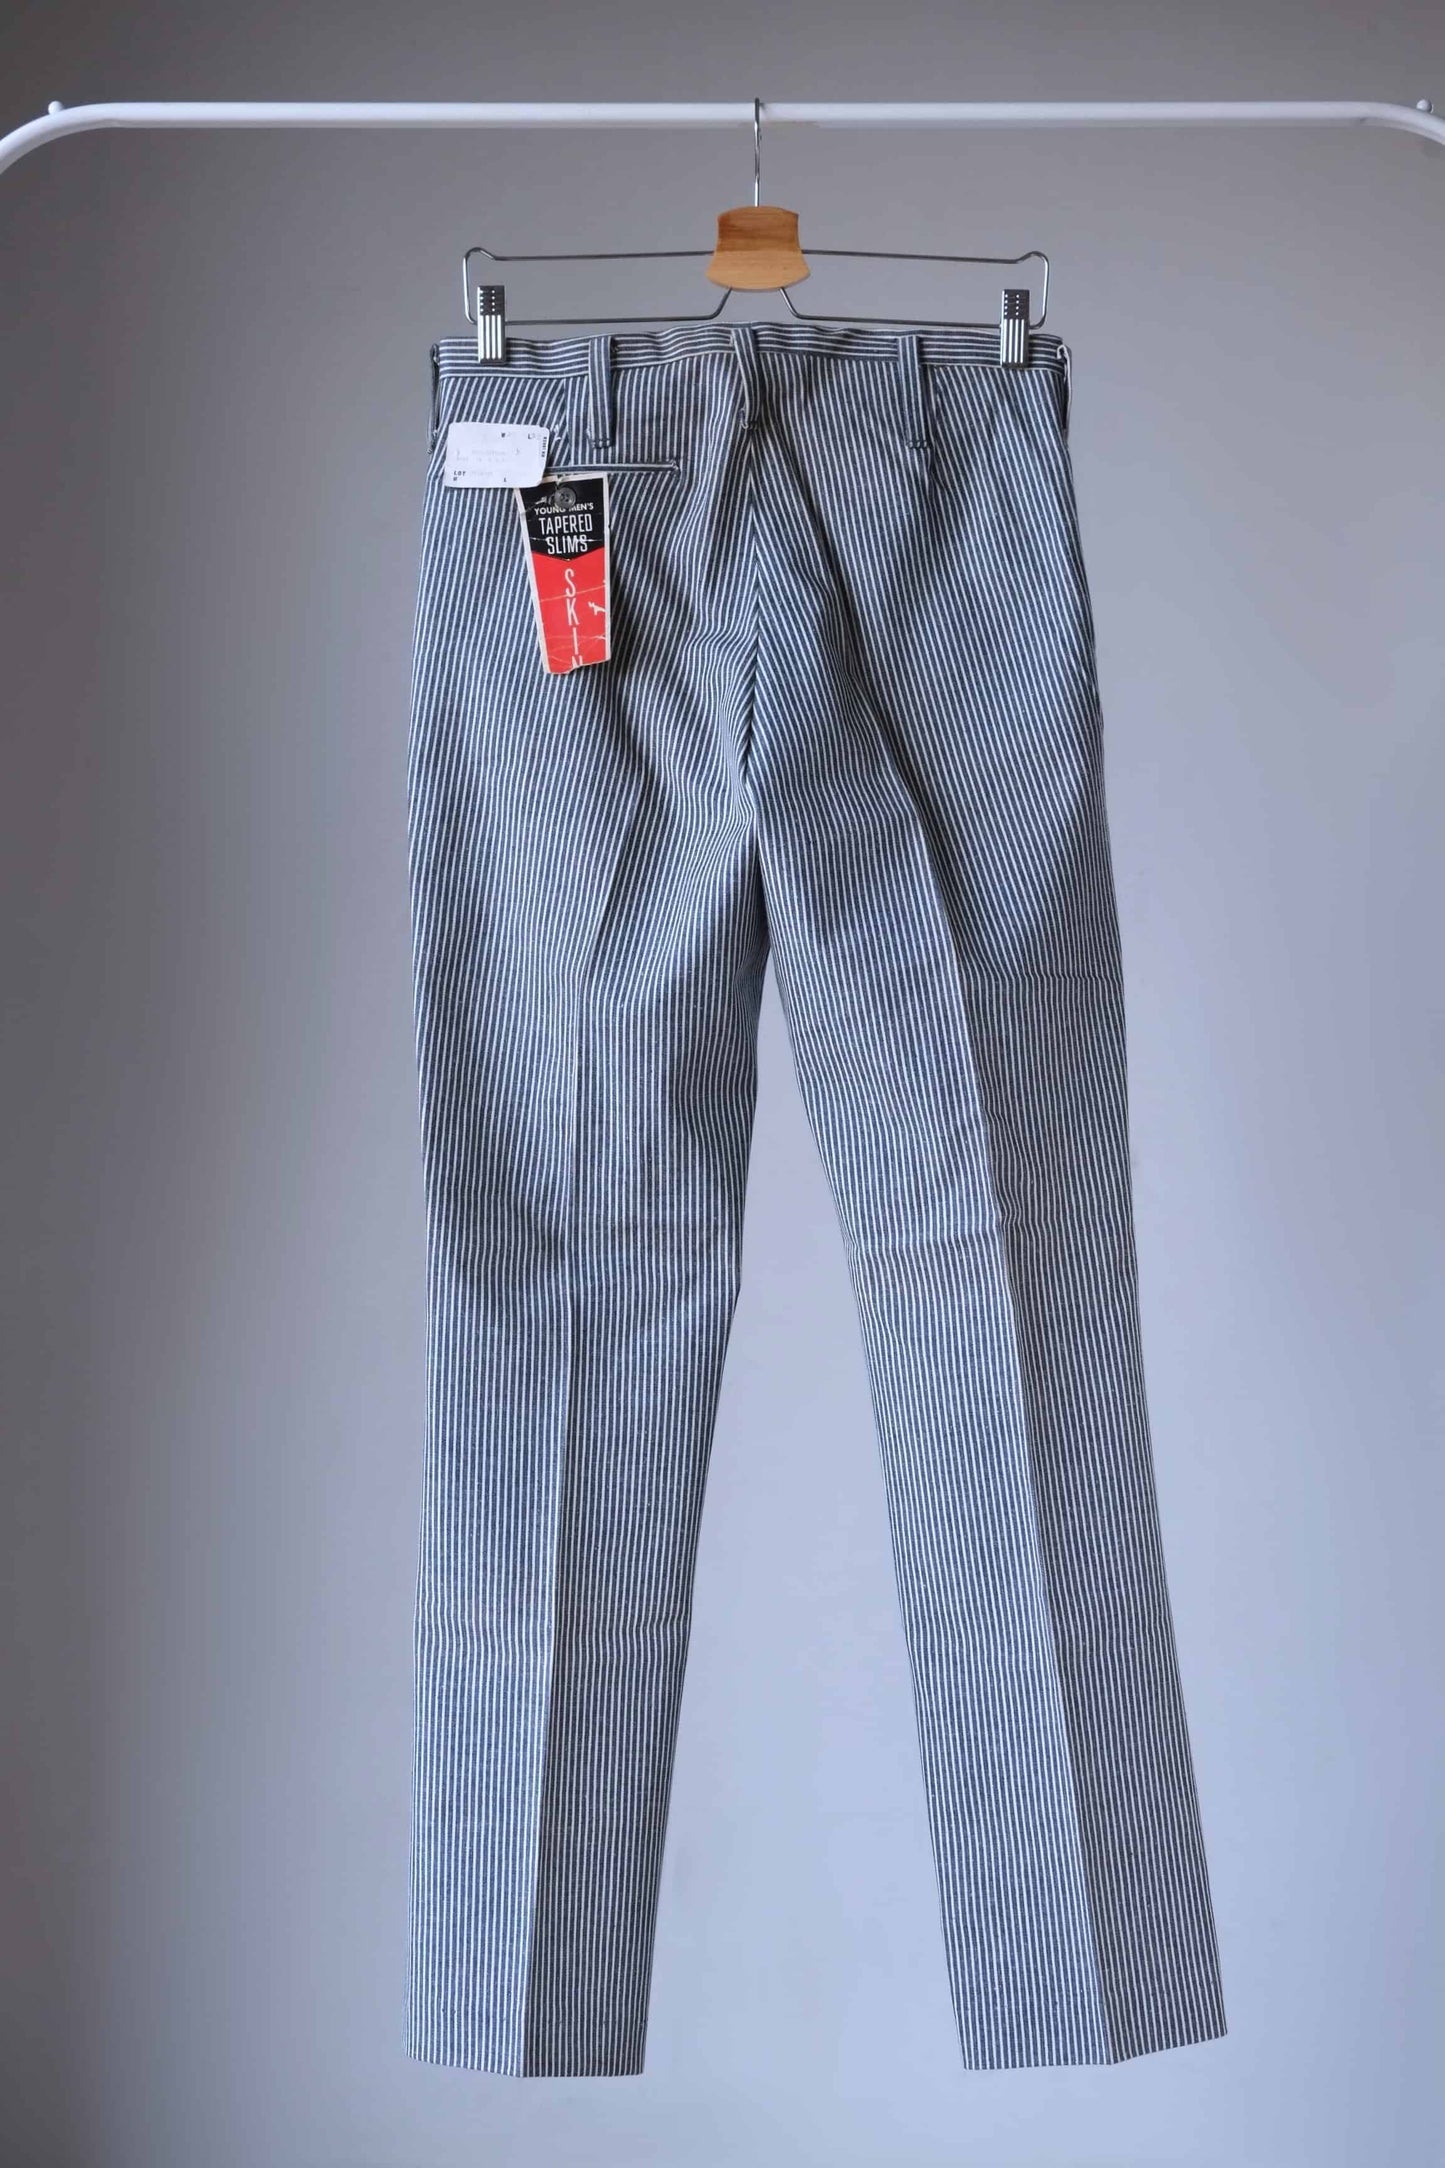 Back view of LEE 60's Vintage Tapered Slim Pants black and white stripes, on hanger